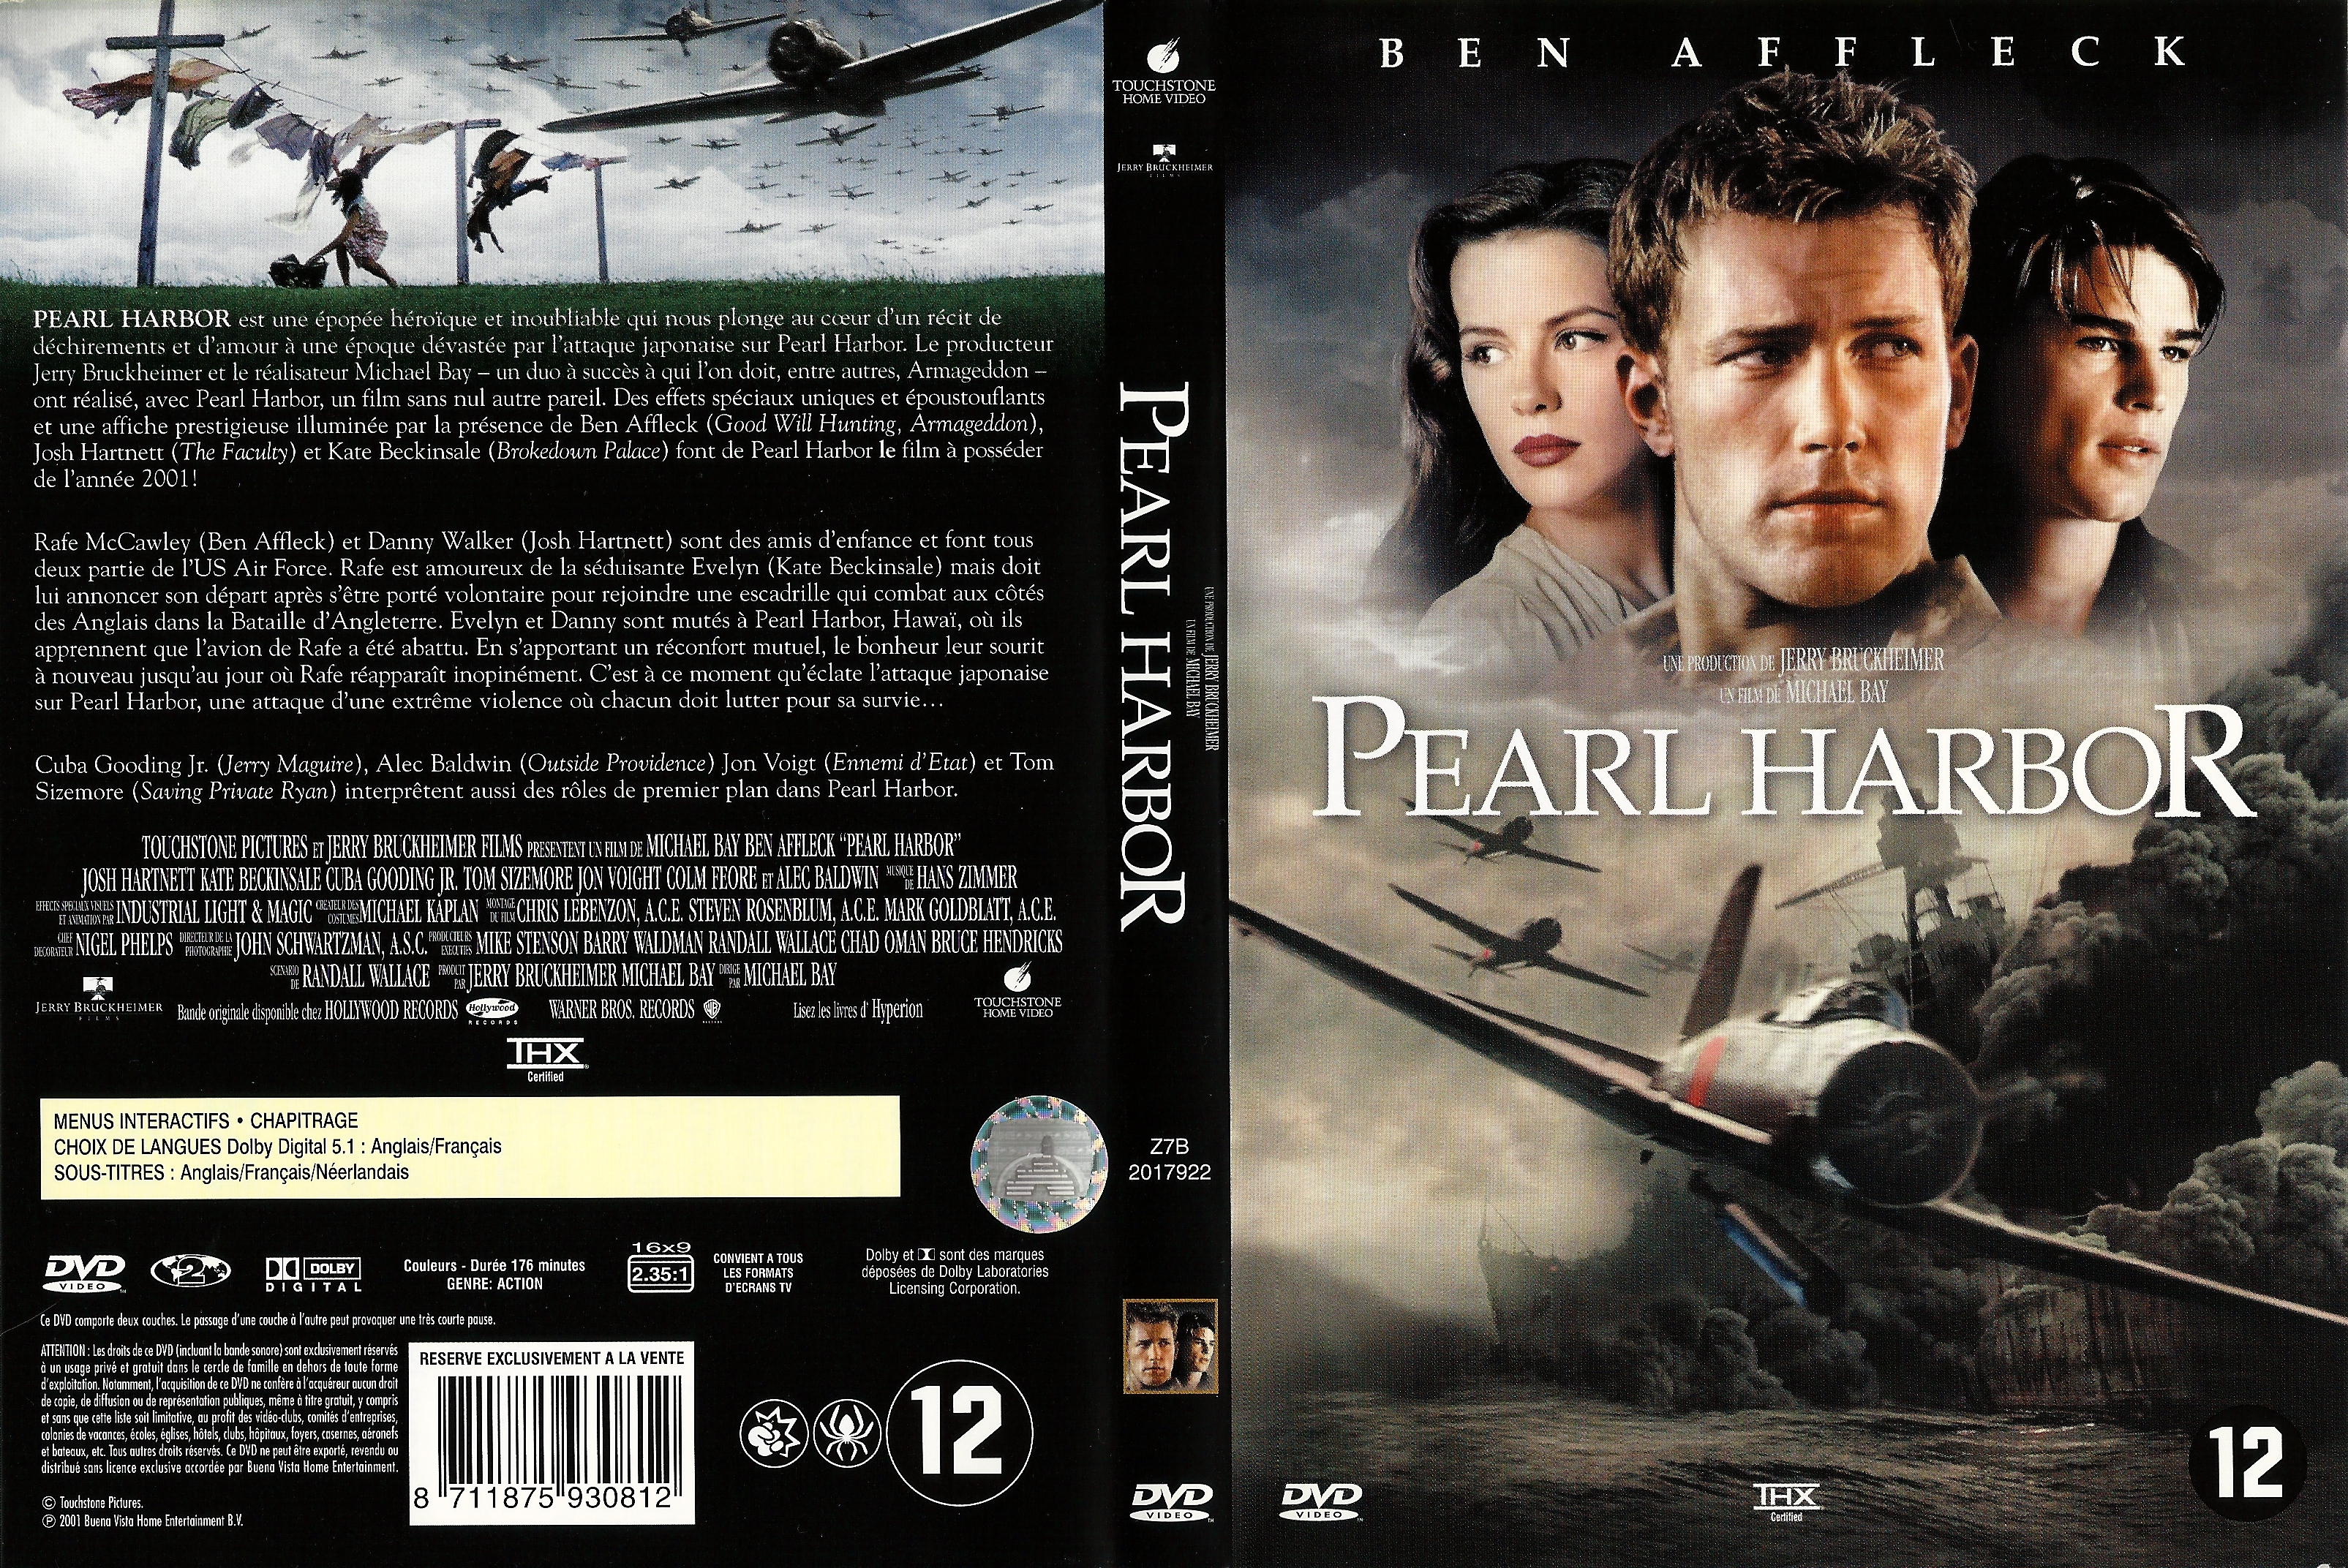 Jaquette DVD Pearl harbor v5